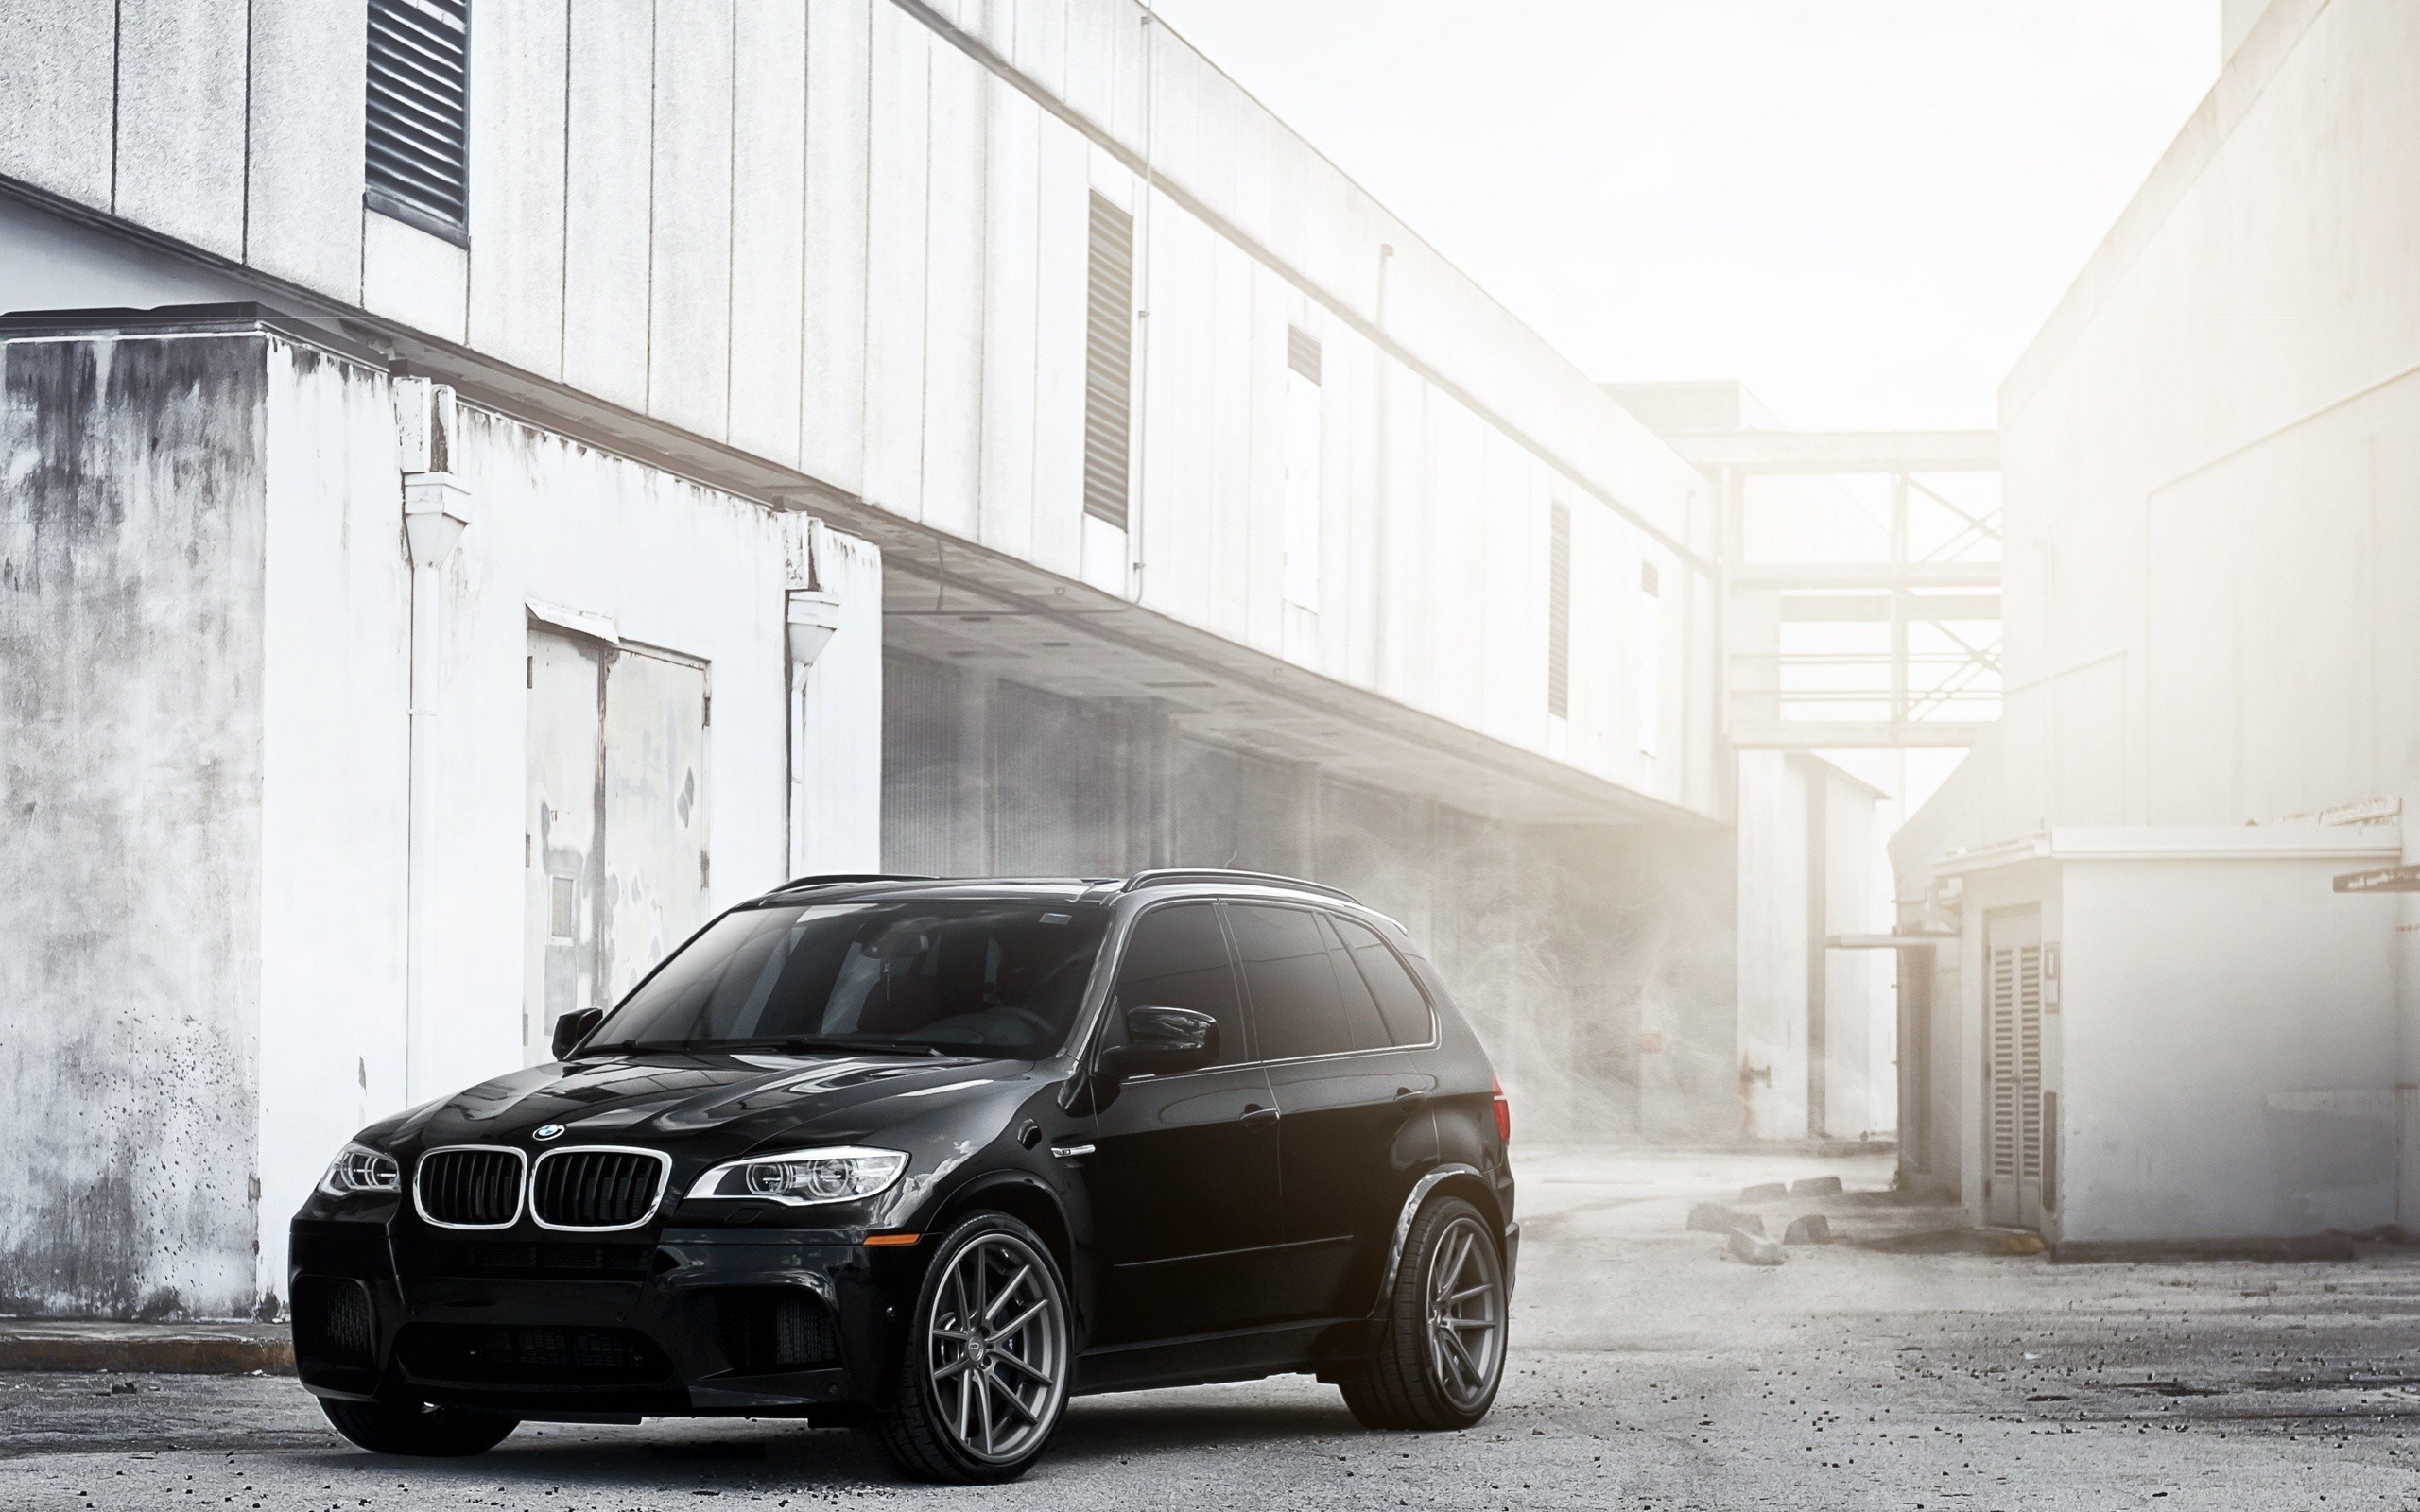 BMW X5 2014 Black, Retro car image, Timeless beauty, Sophisticated elegance, 2560x1600 HD Desktop